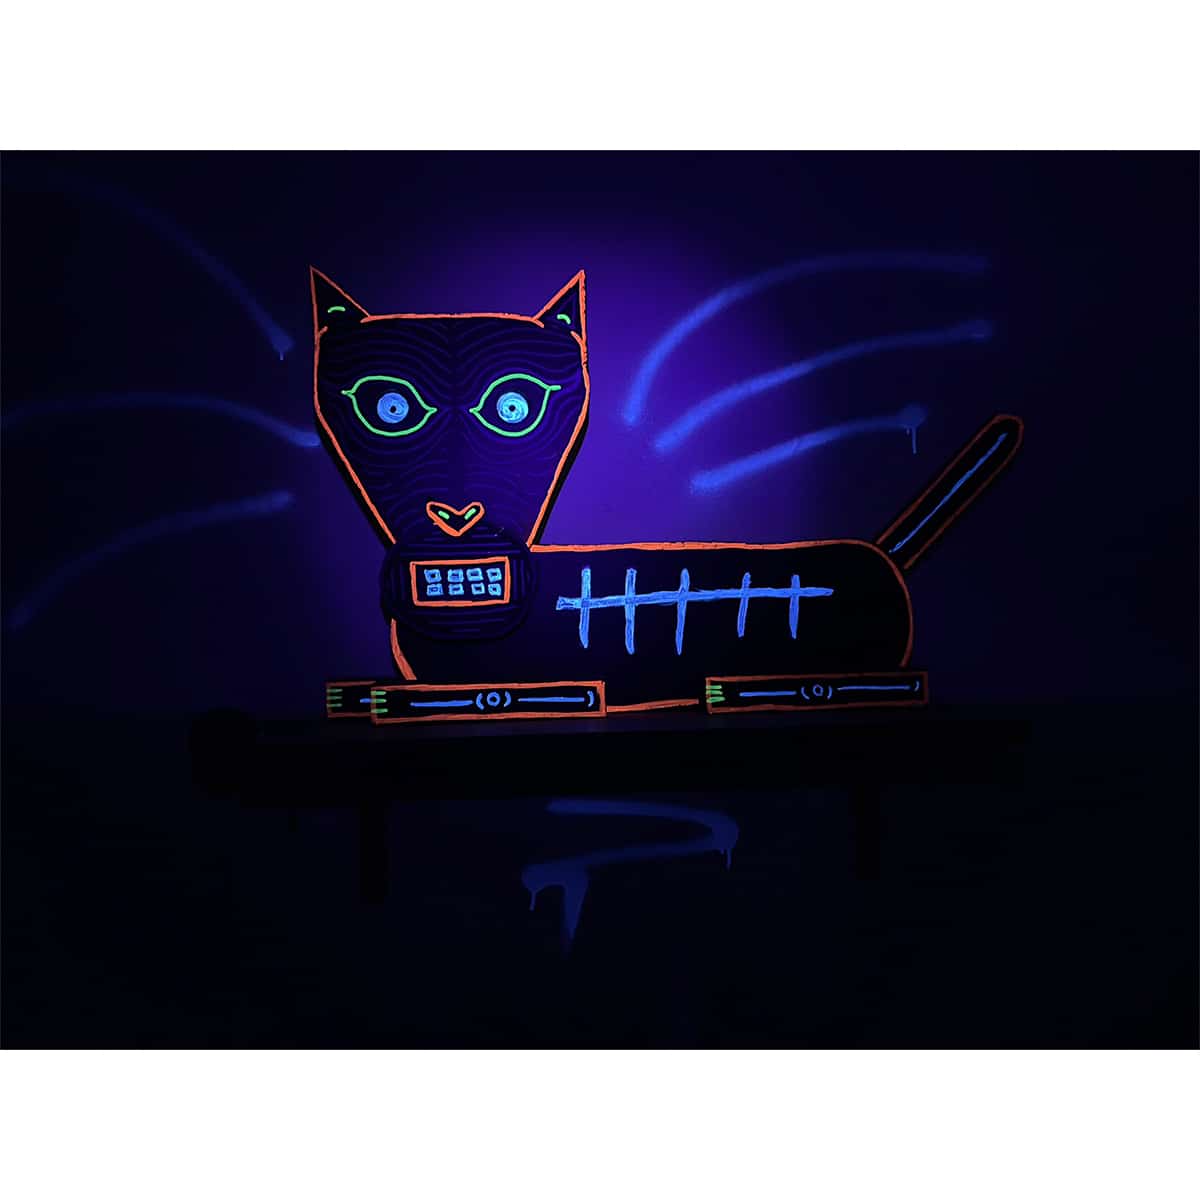 Artwork -_0001__0001_CAPTAIN THE CAT 02 - blacklight - Frank Willems